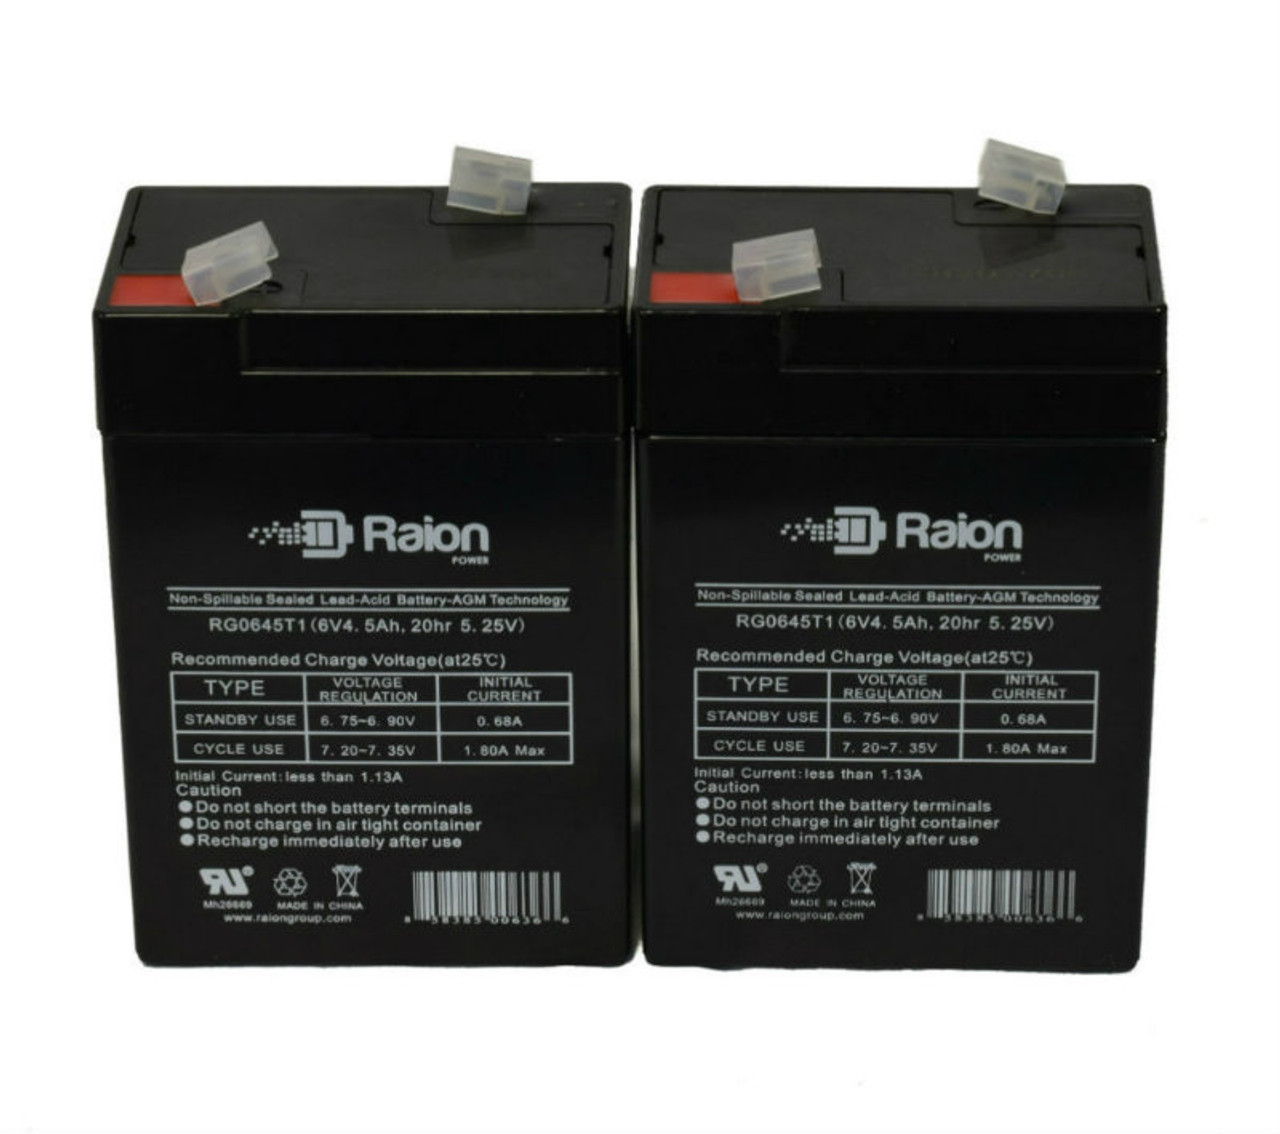 Raion Power 6 Volt 4.5Ah RG0645T1 Replacement Battery for Vasworld Power GB6-6 - 2 Pack